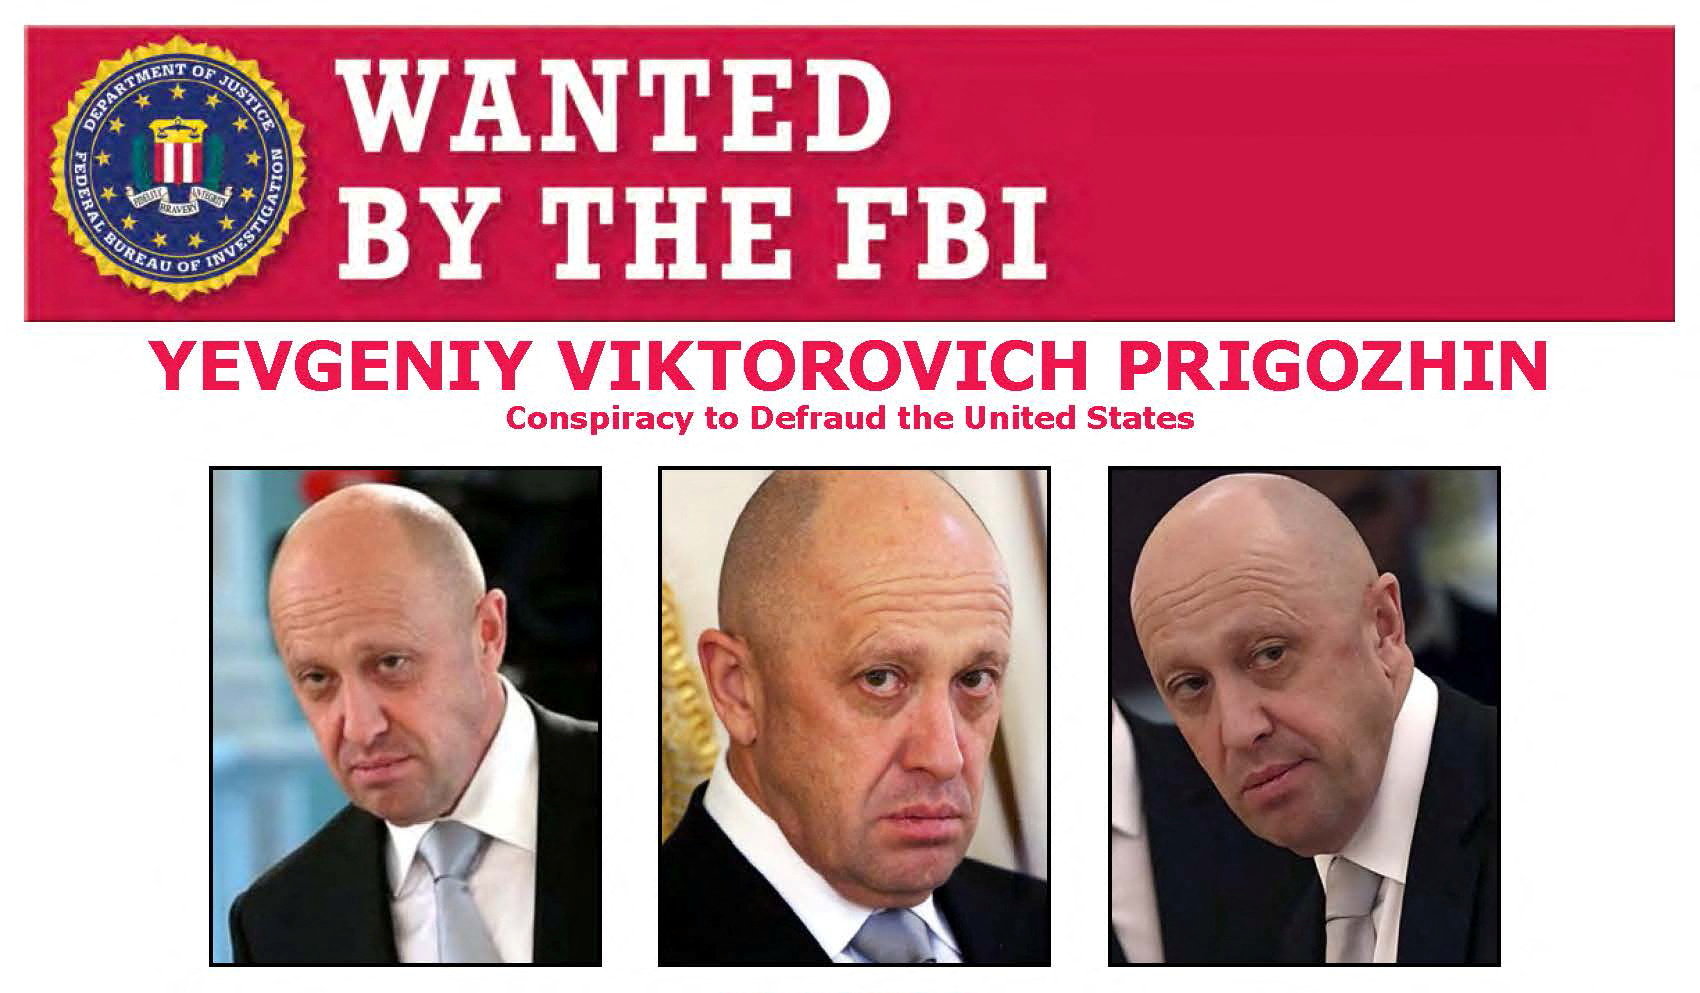 Yevgeniy Prigozhin, buscado por el FBI